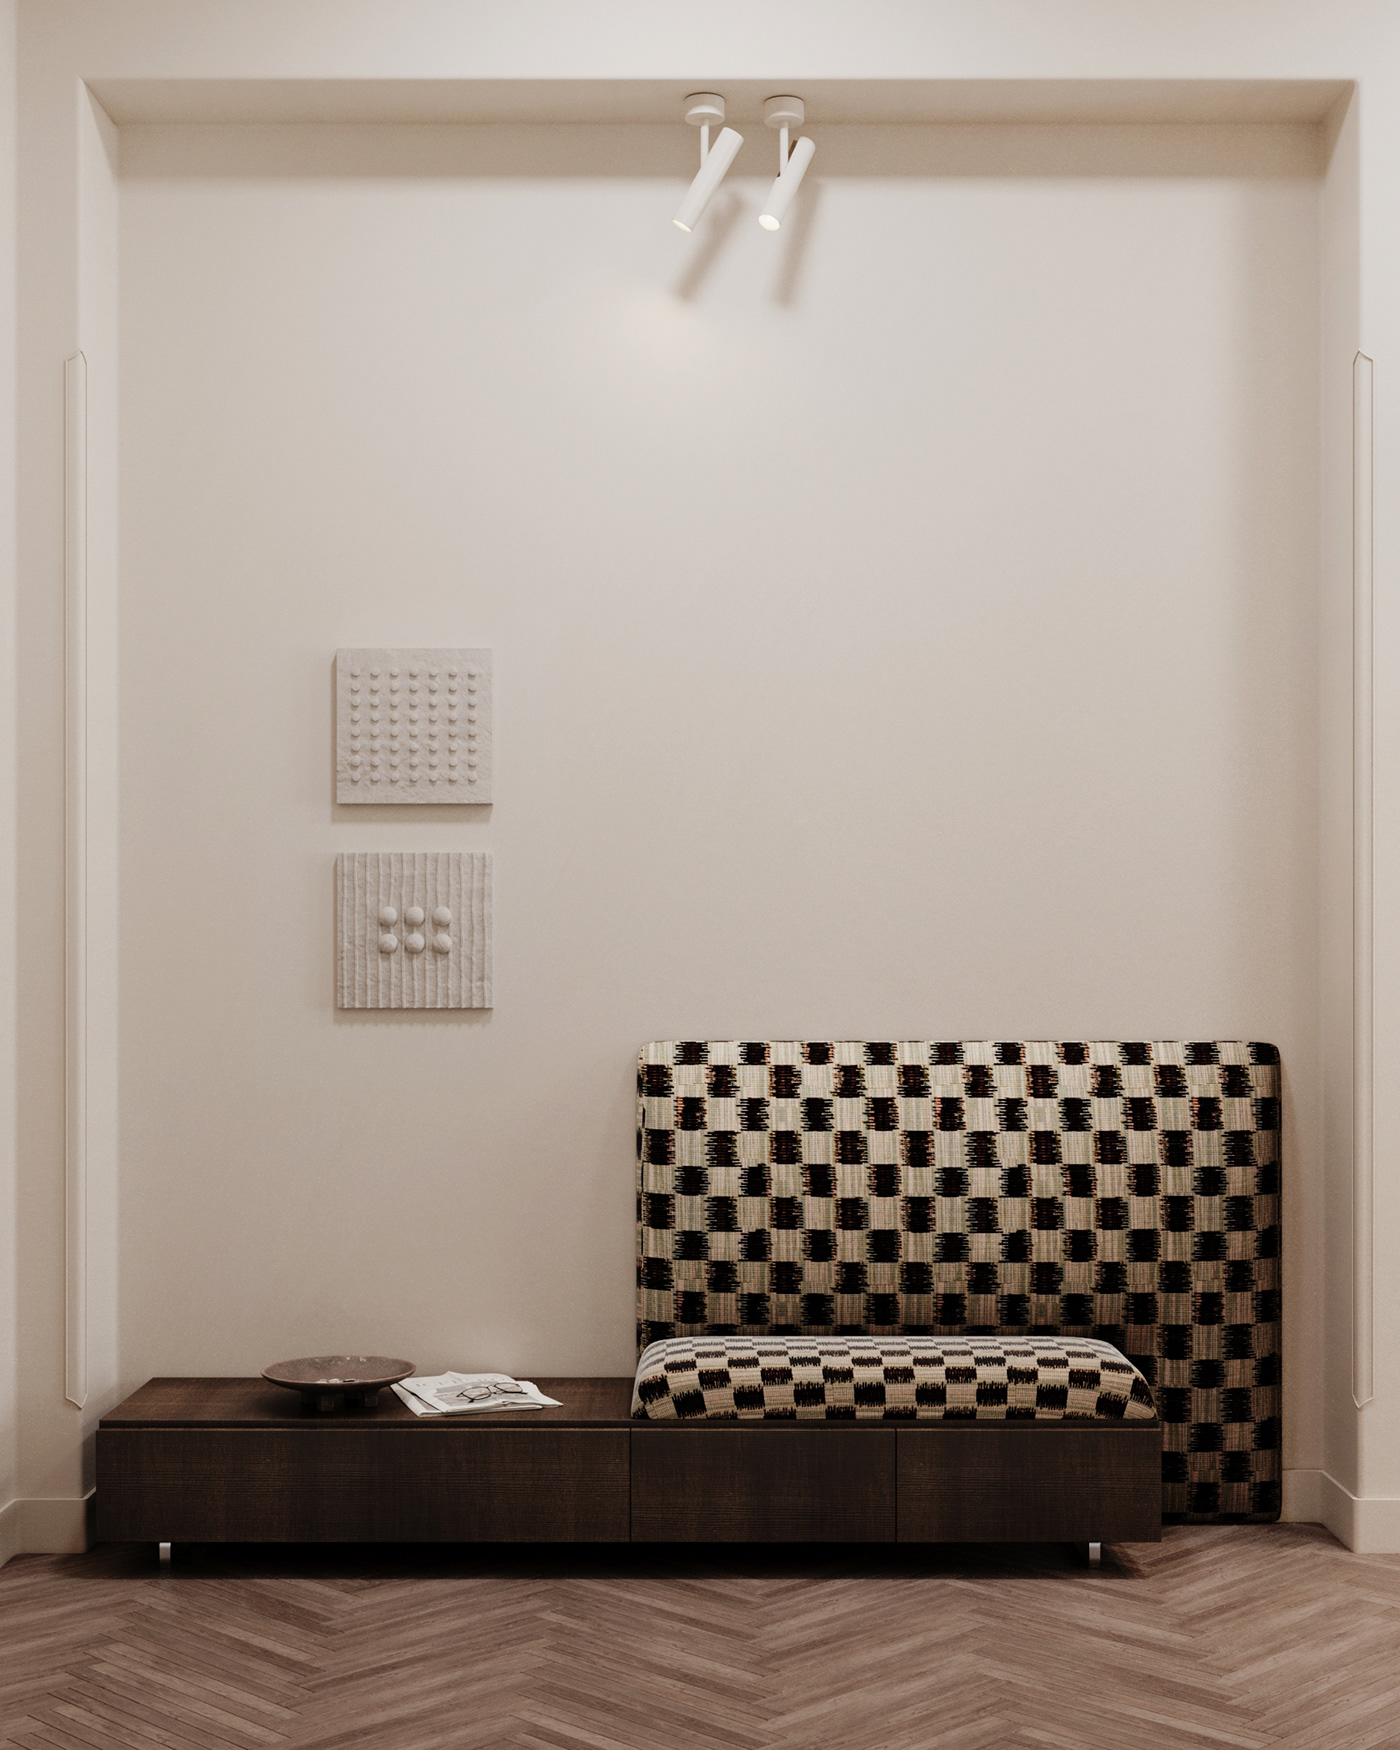 apartment living room kitchen badroom 3d max corona render  modern interior modern interior design visualization design interior